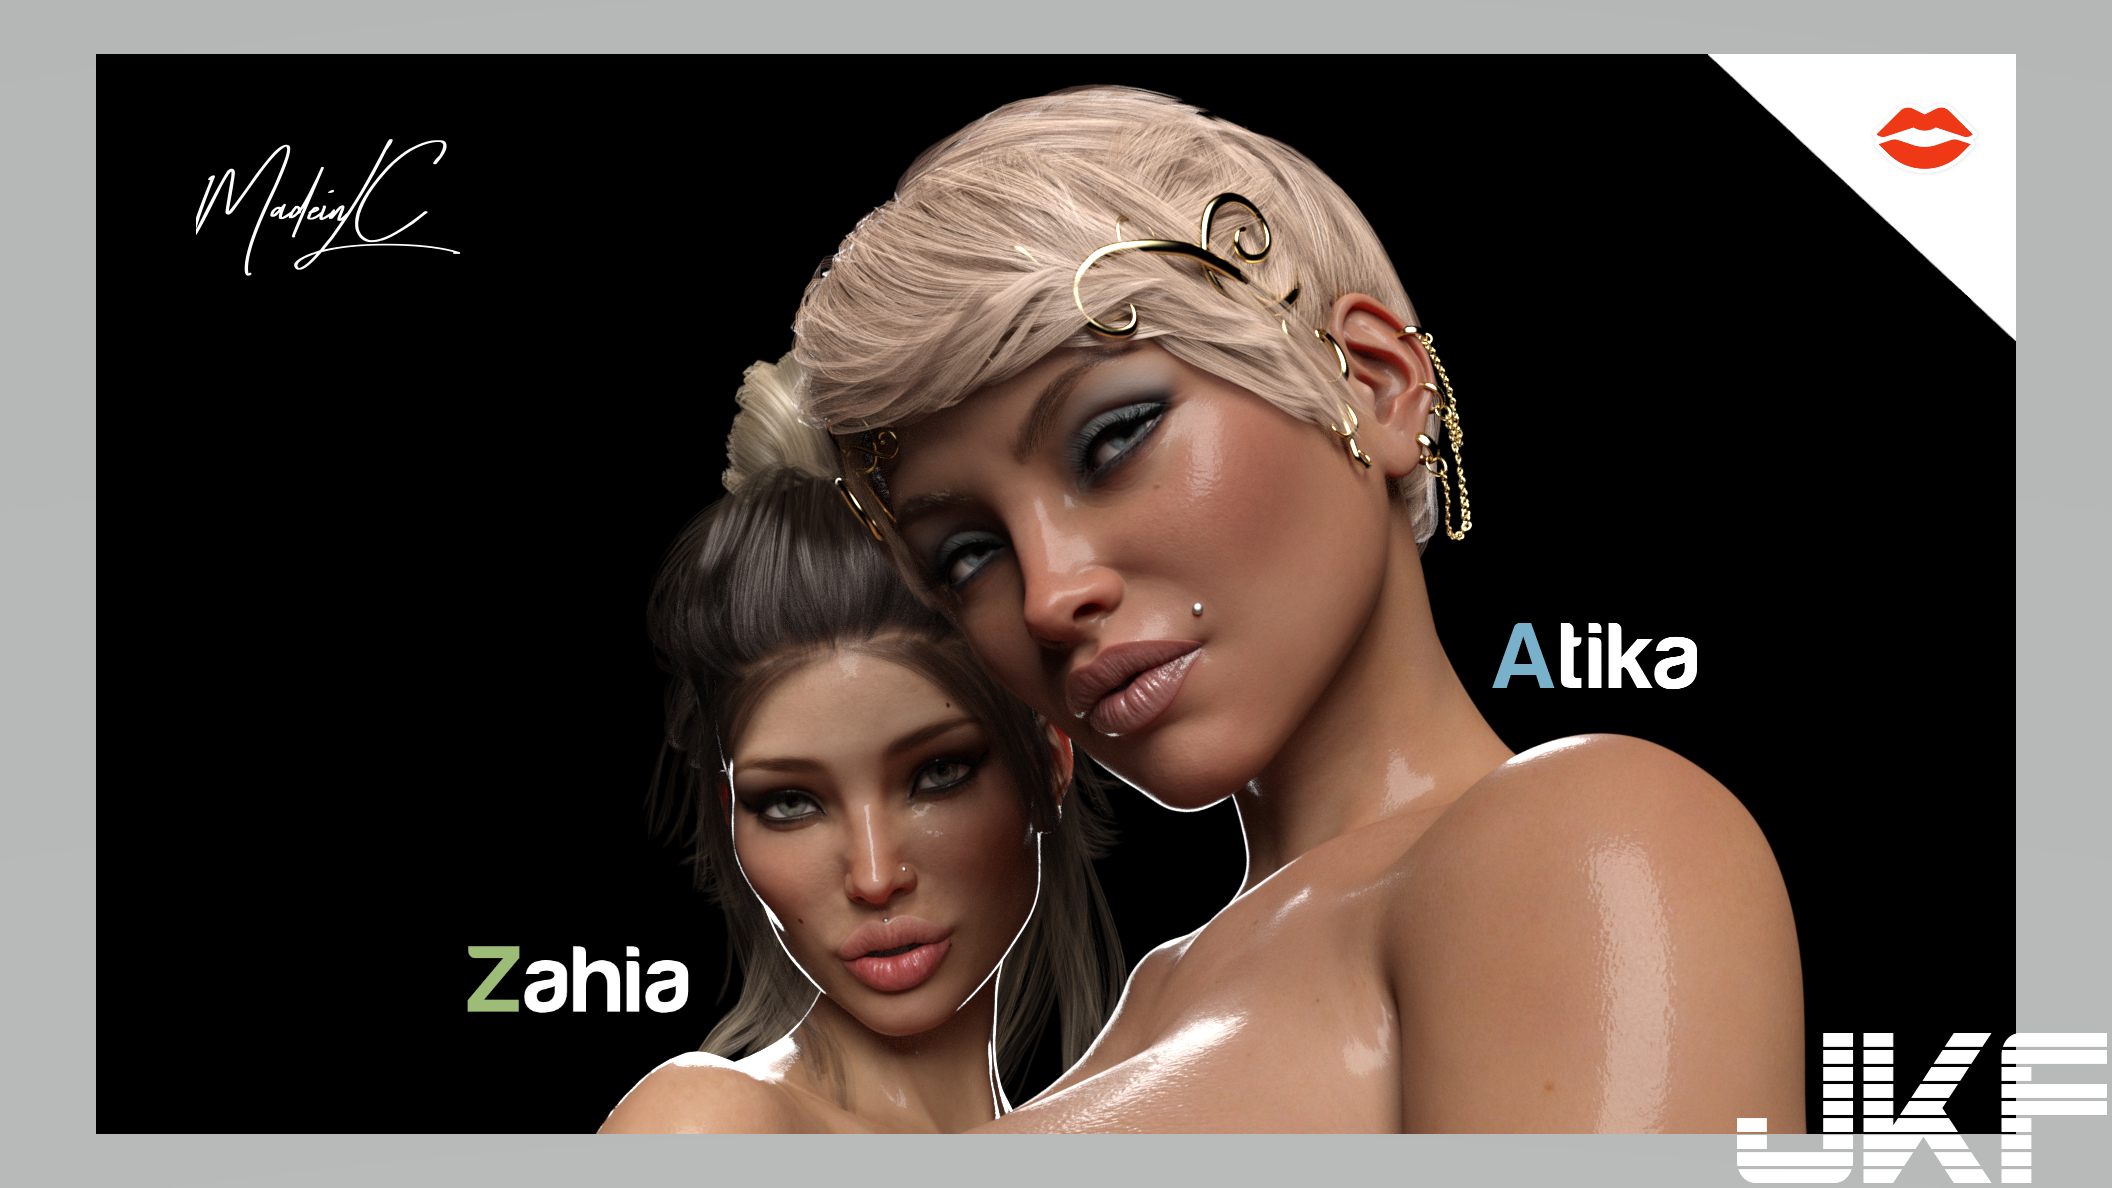 zahia_1_1_and_new_atika_3_0_by_madeinlc_dbyag20.png